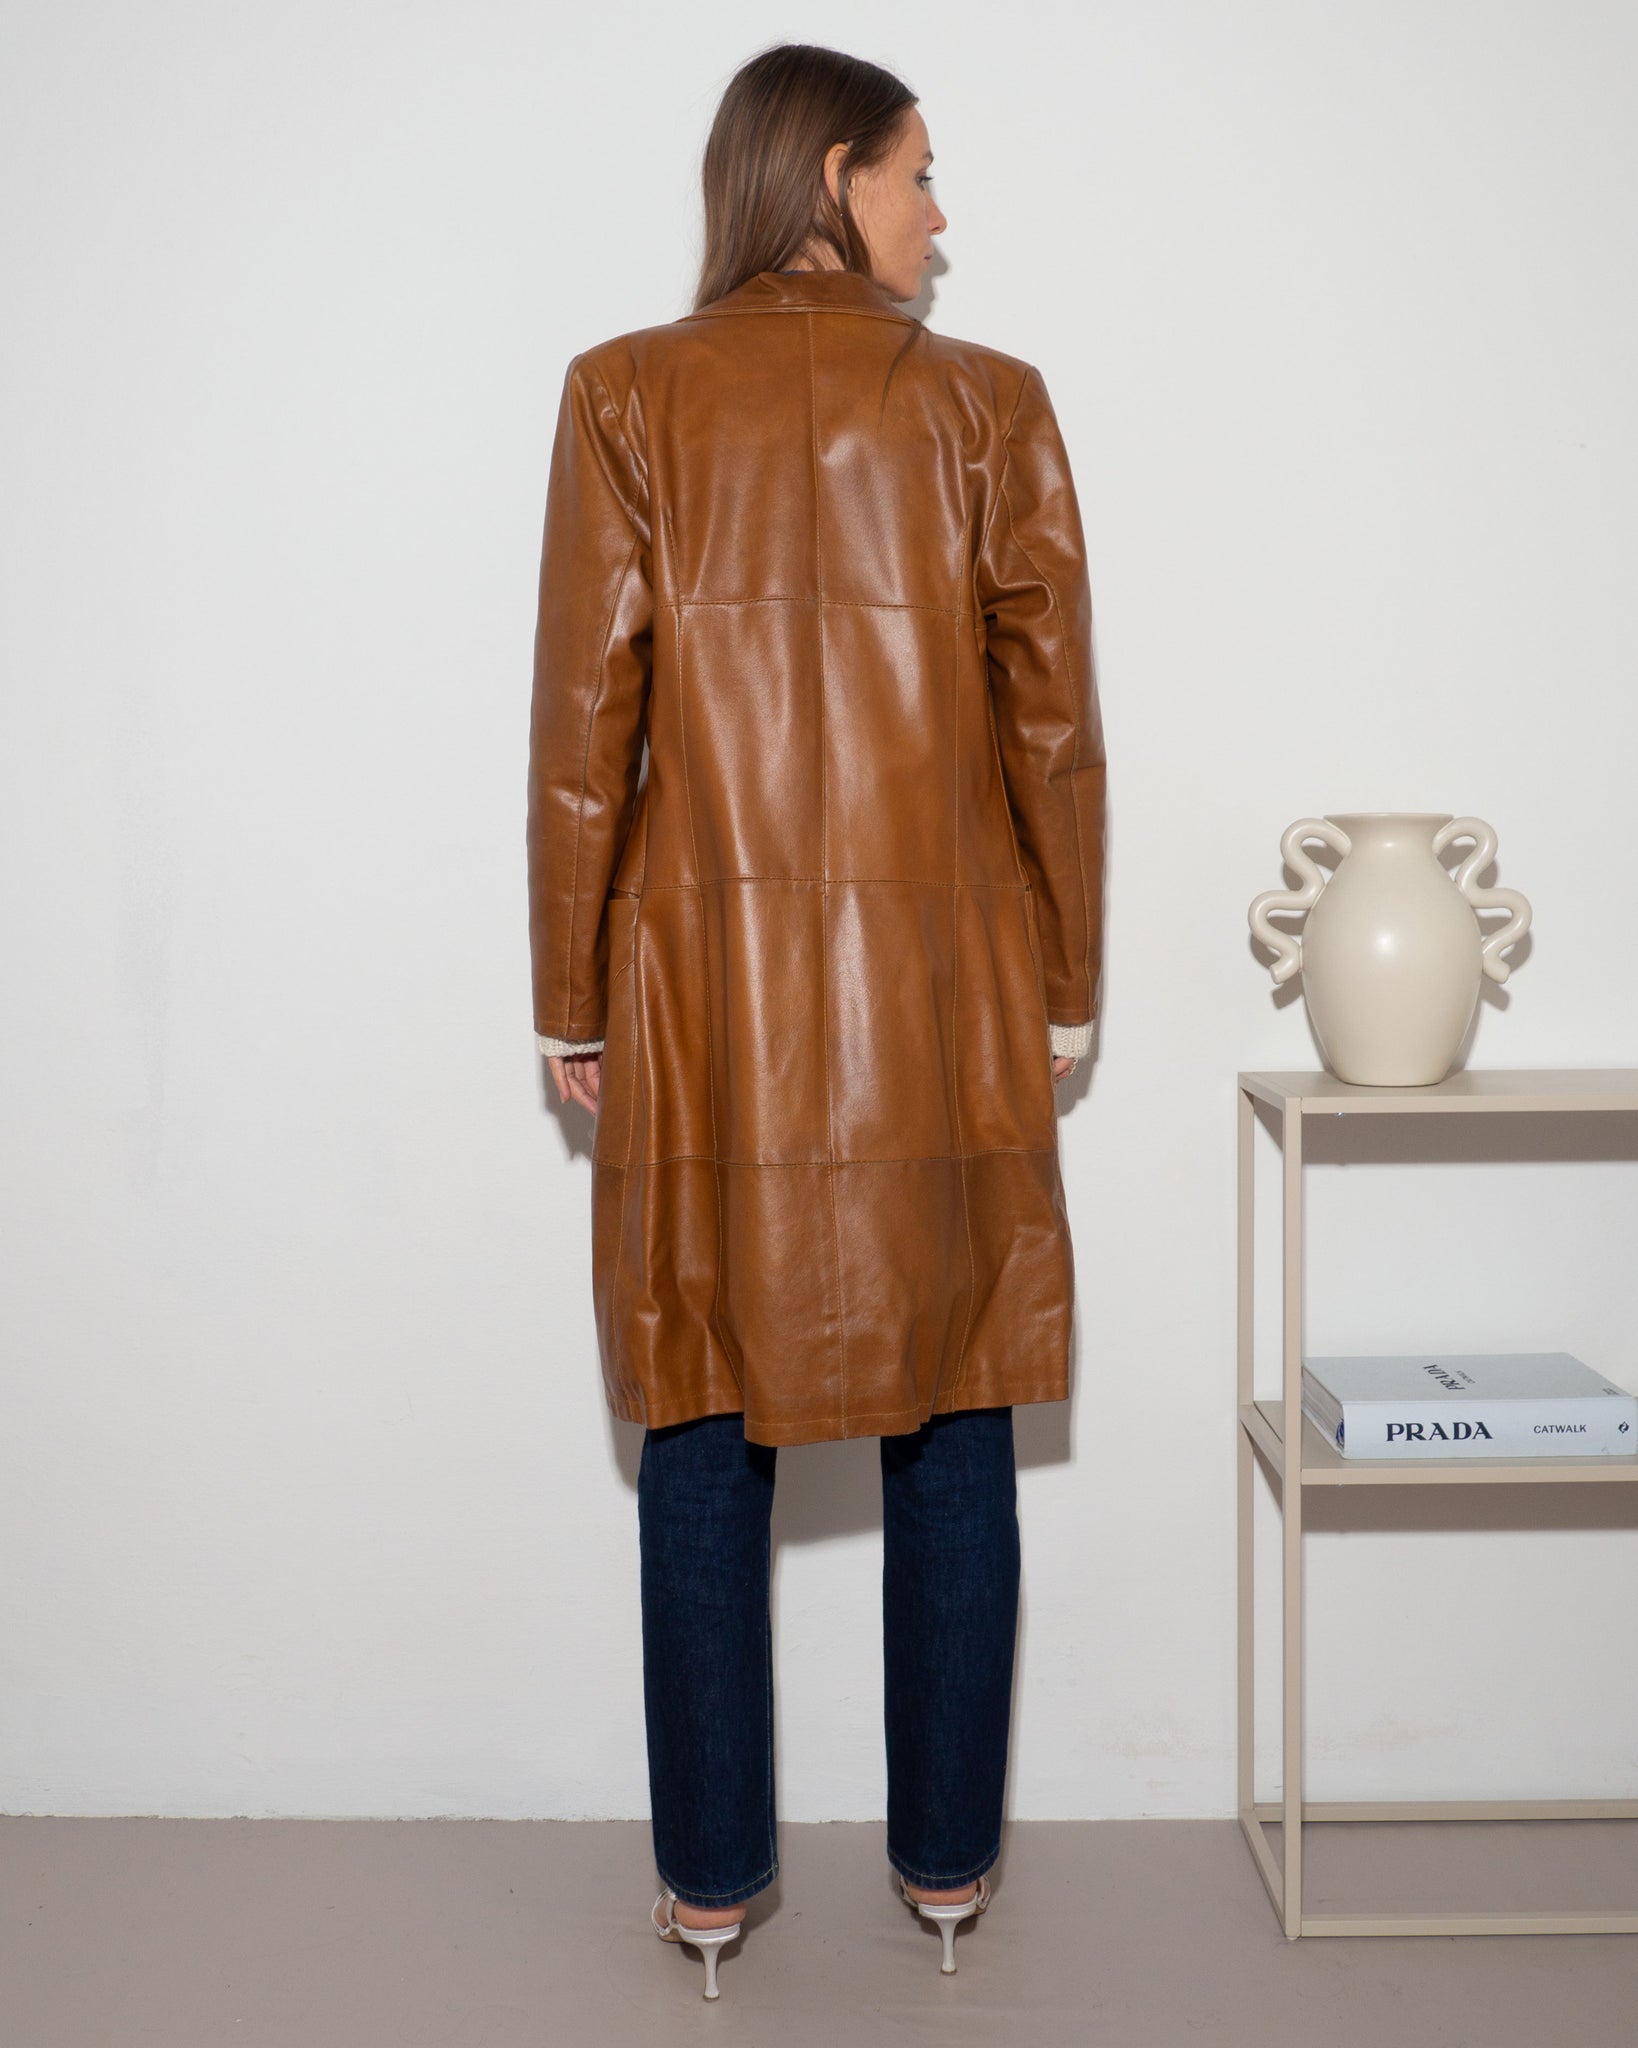 Tan Leather Coat